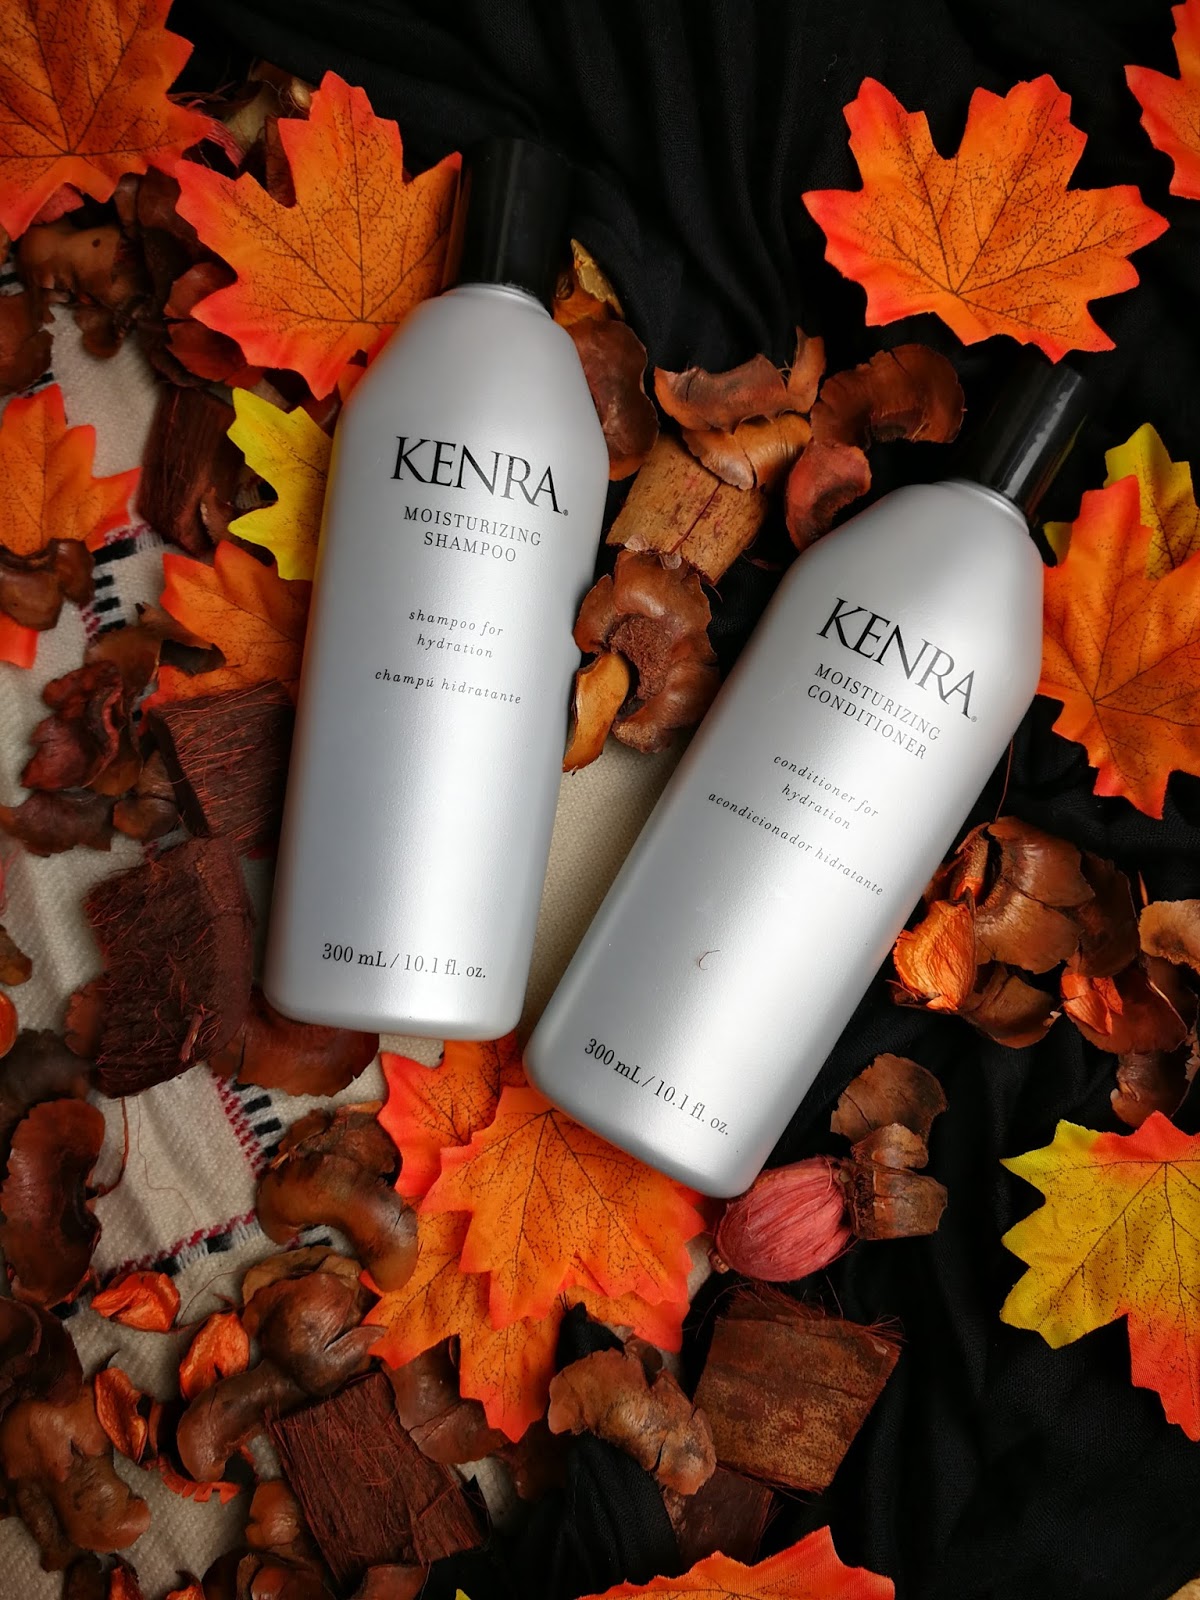 Kenra Professional Moisturising Shampoo and Conditioner